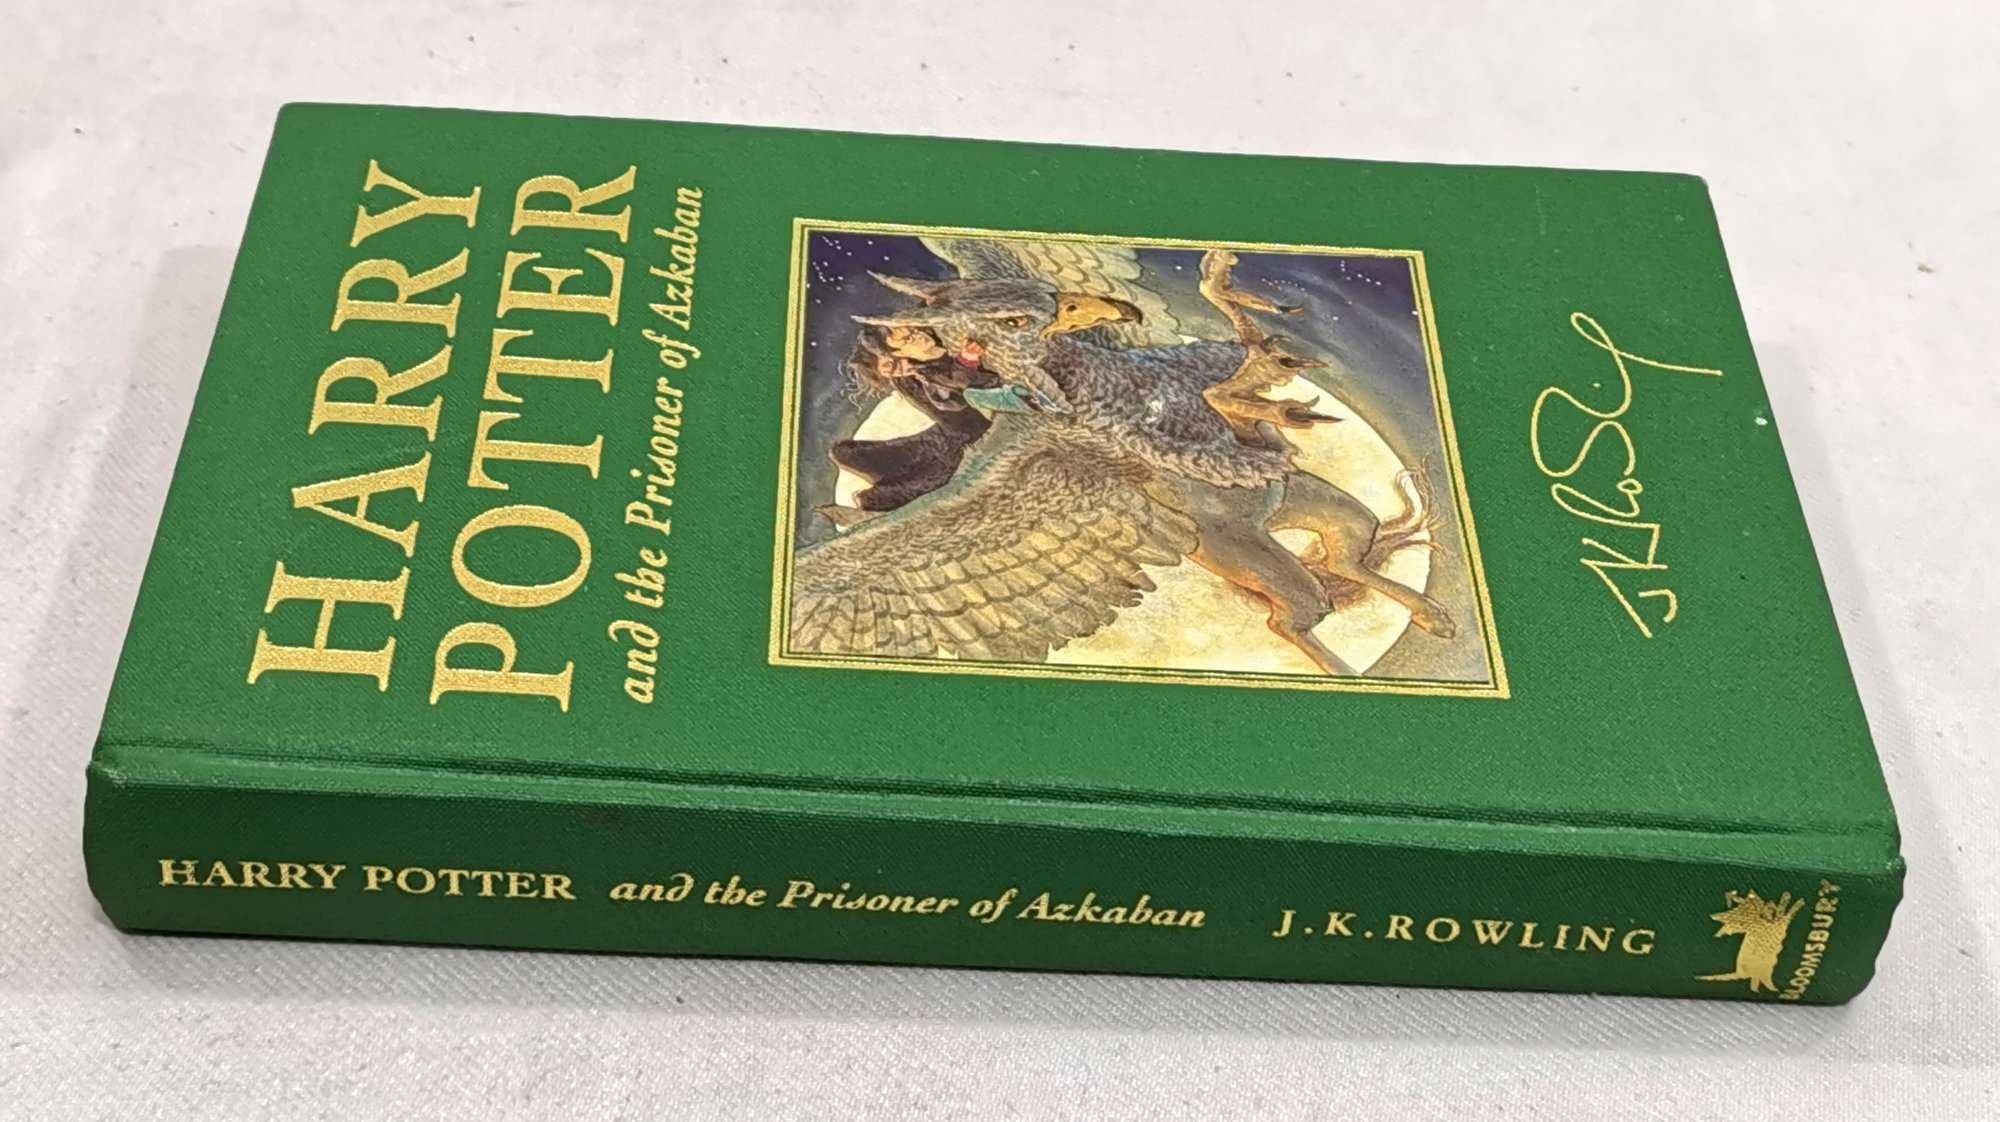 Prima Editie, J.K. Rowling, Harry Potter and the Prisoner of Azkaban